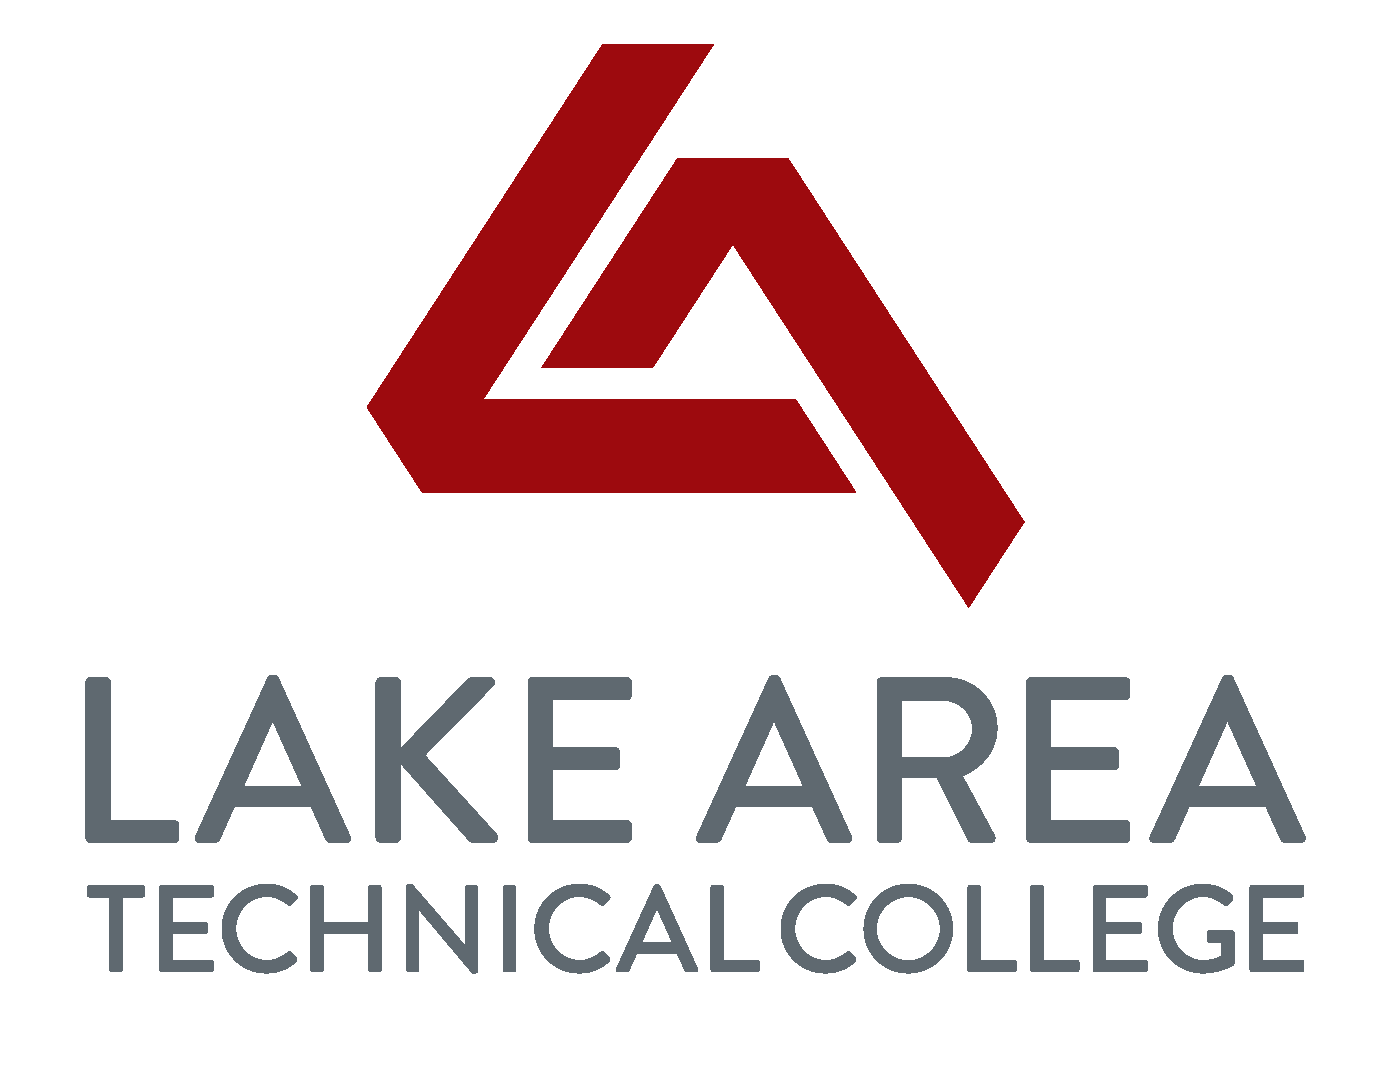 Lake area technical vert clr process